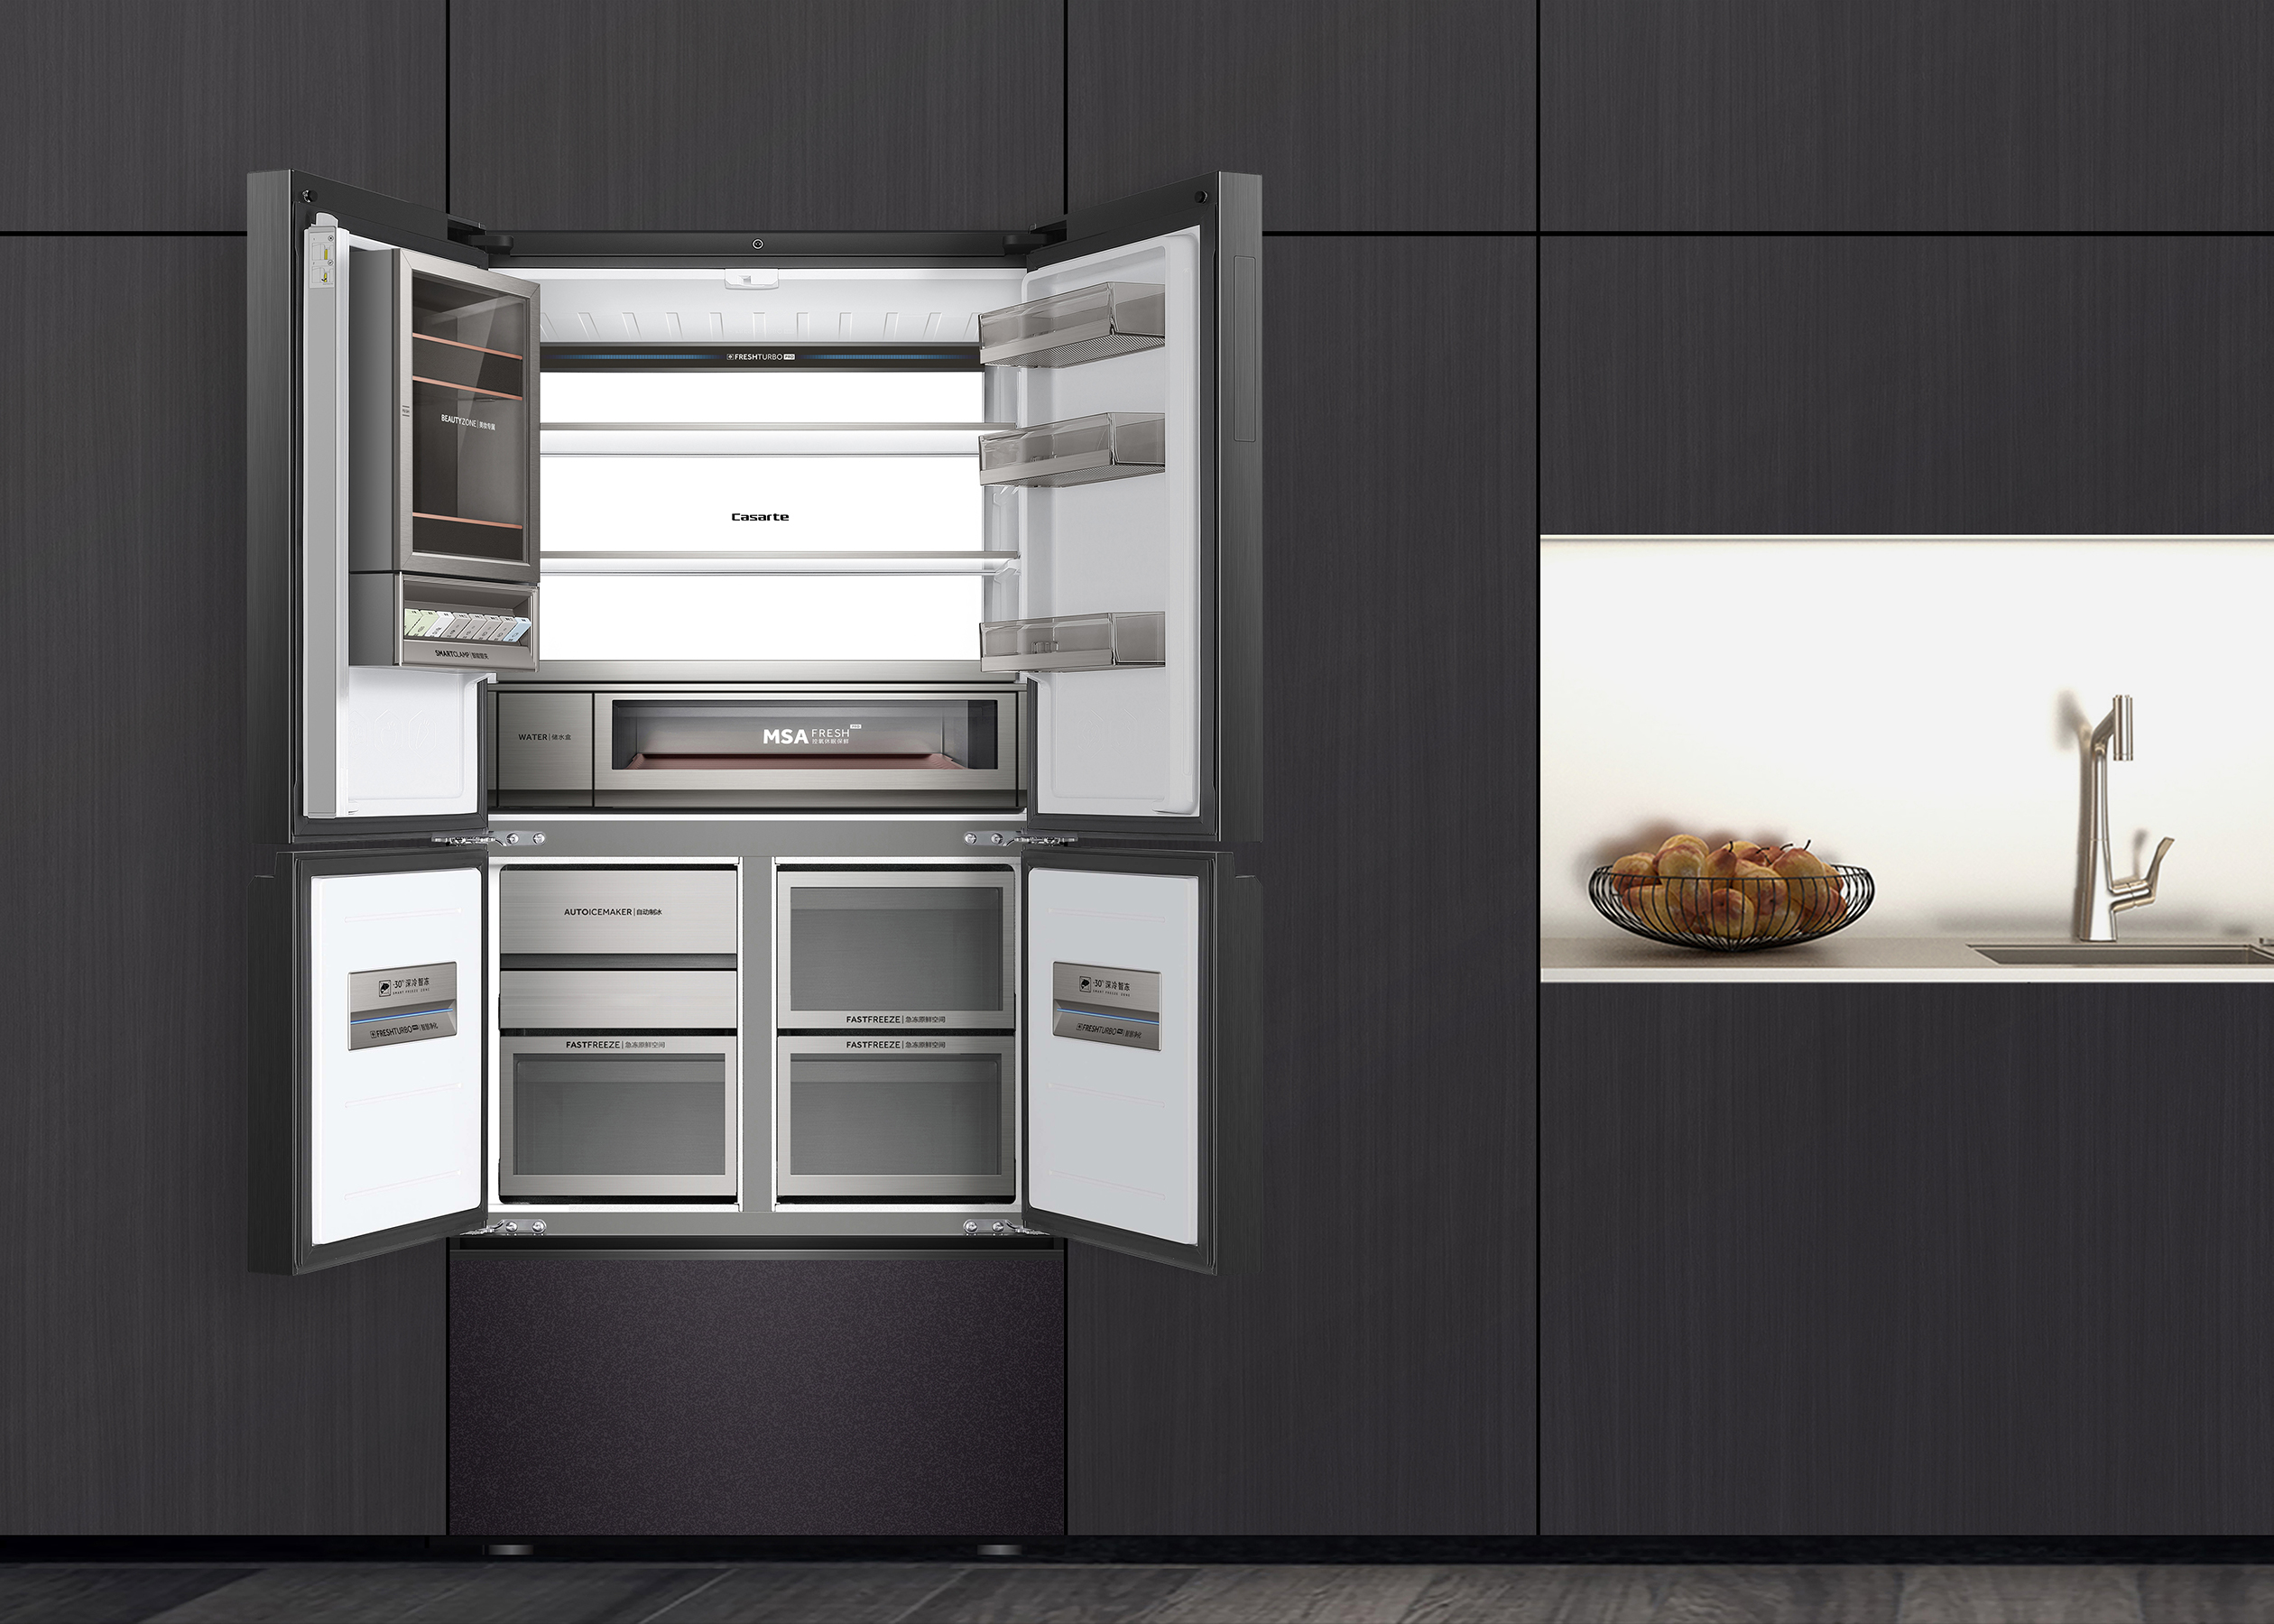 Casarte TianCheng F+ Series refrigerator